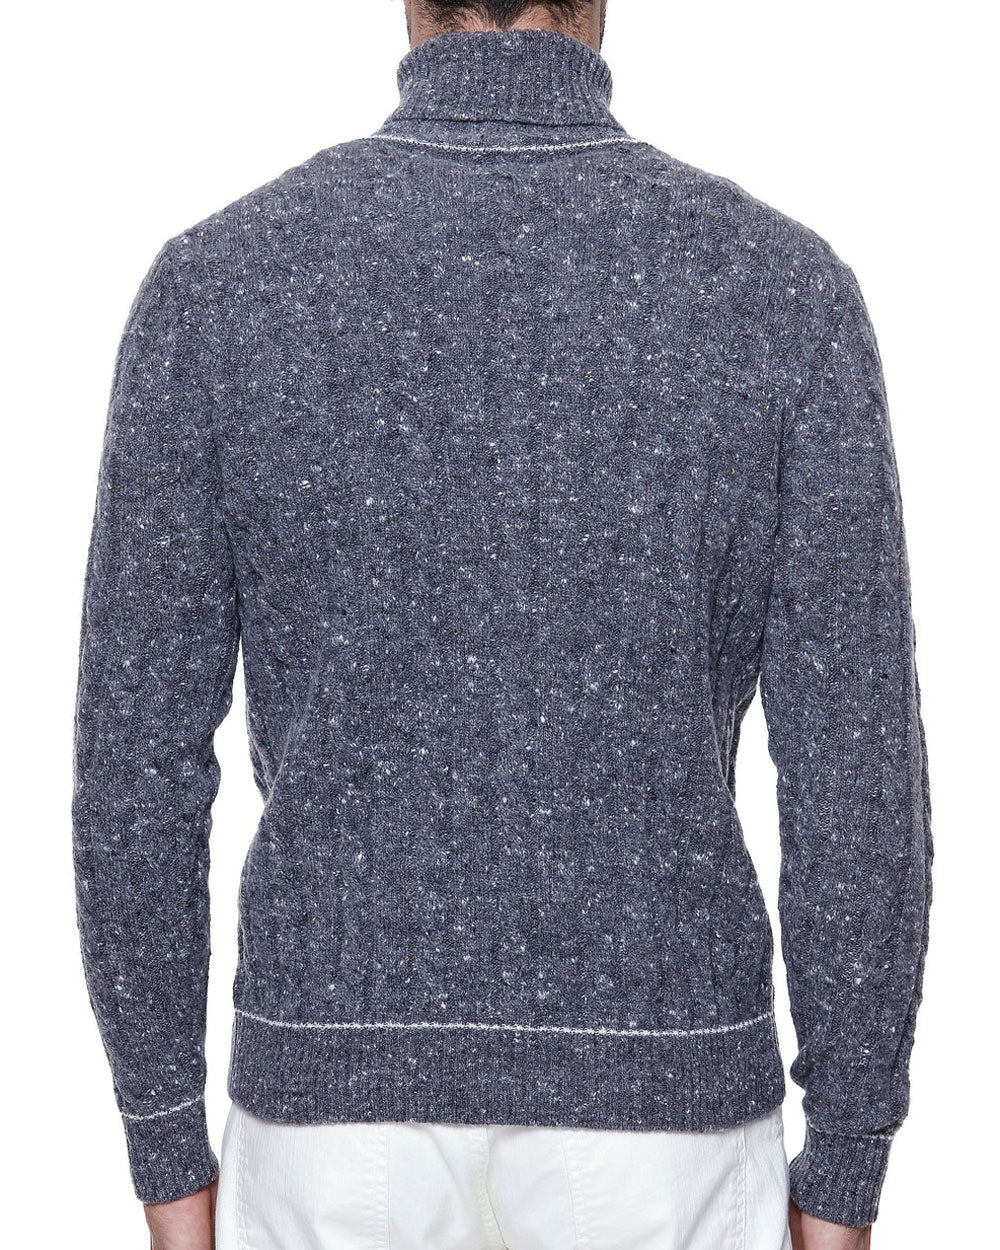 Mid Grey Melange Turtleneck Sweater